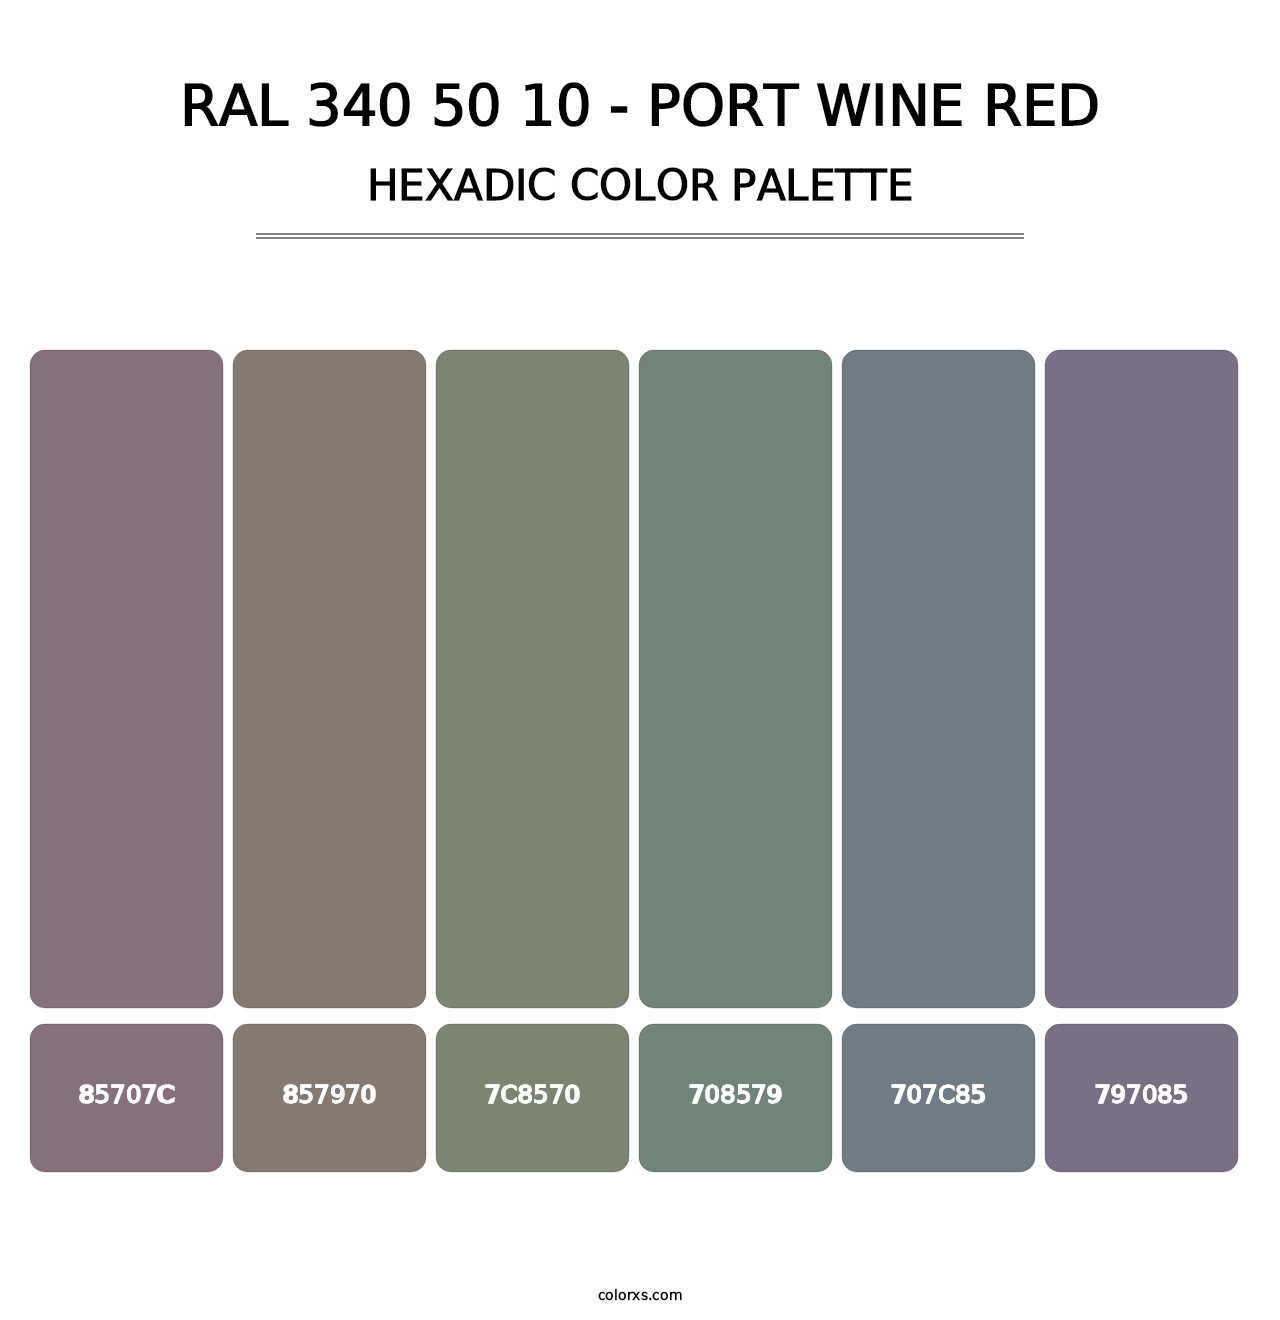 RAL 340 50 10 - Port Wine Red - Hexadic Color Palette